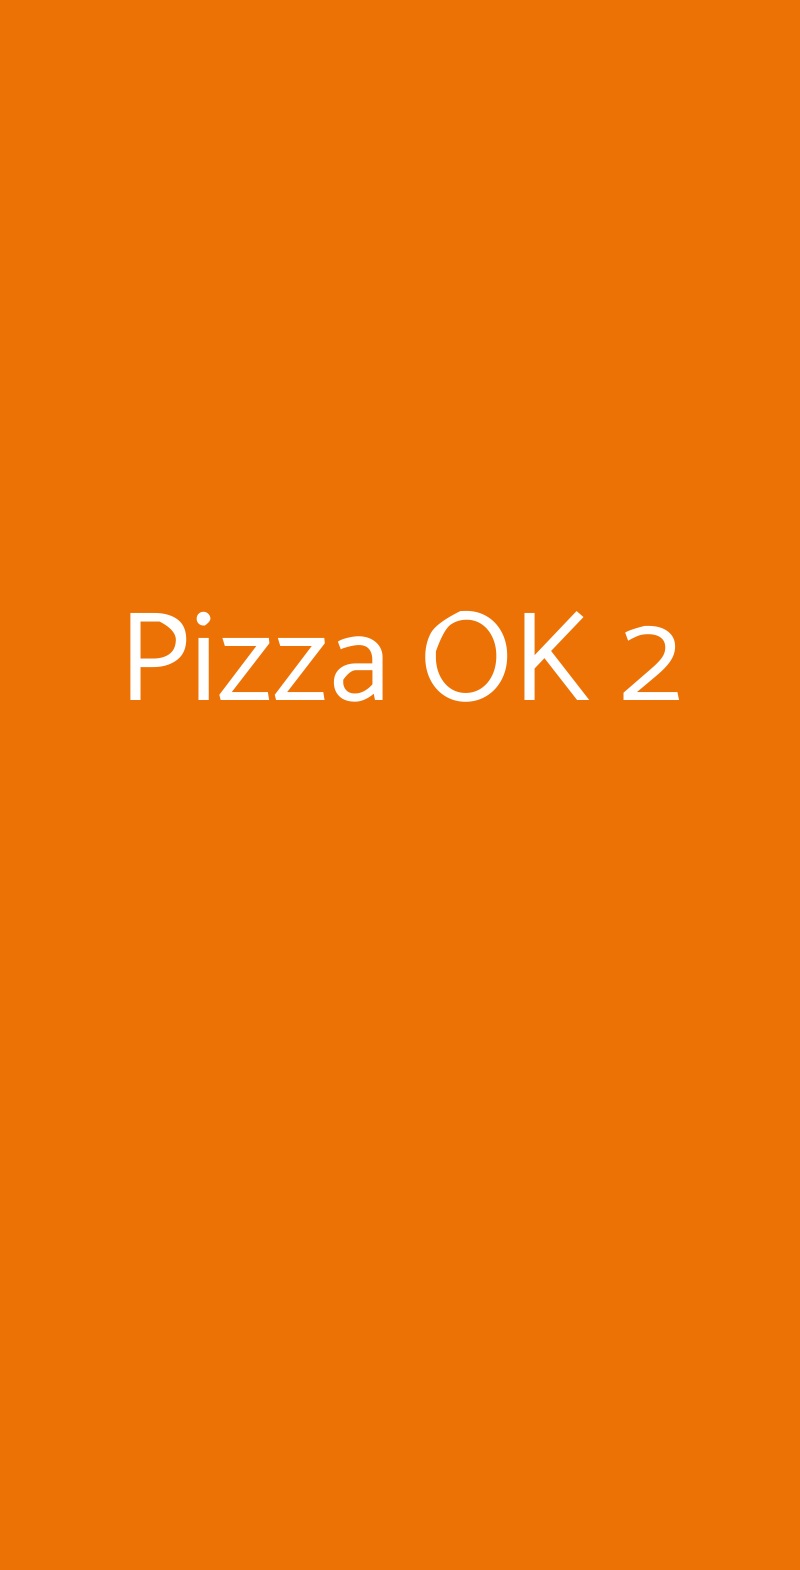 Pizza OK 2 Milano menù 1 pagina